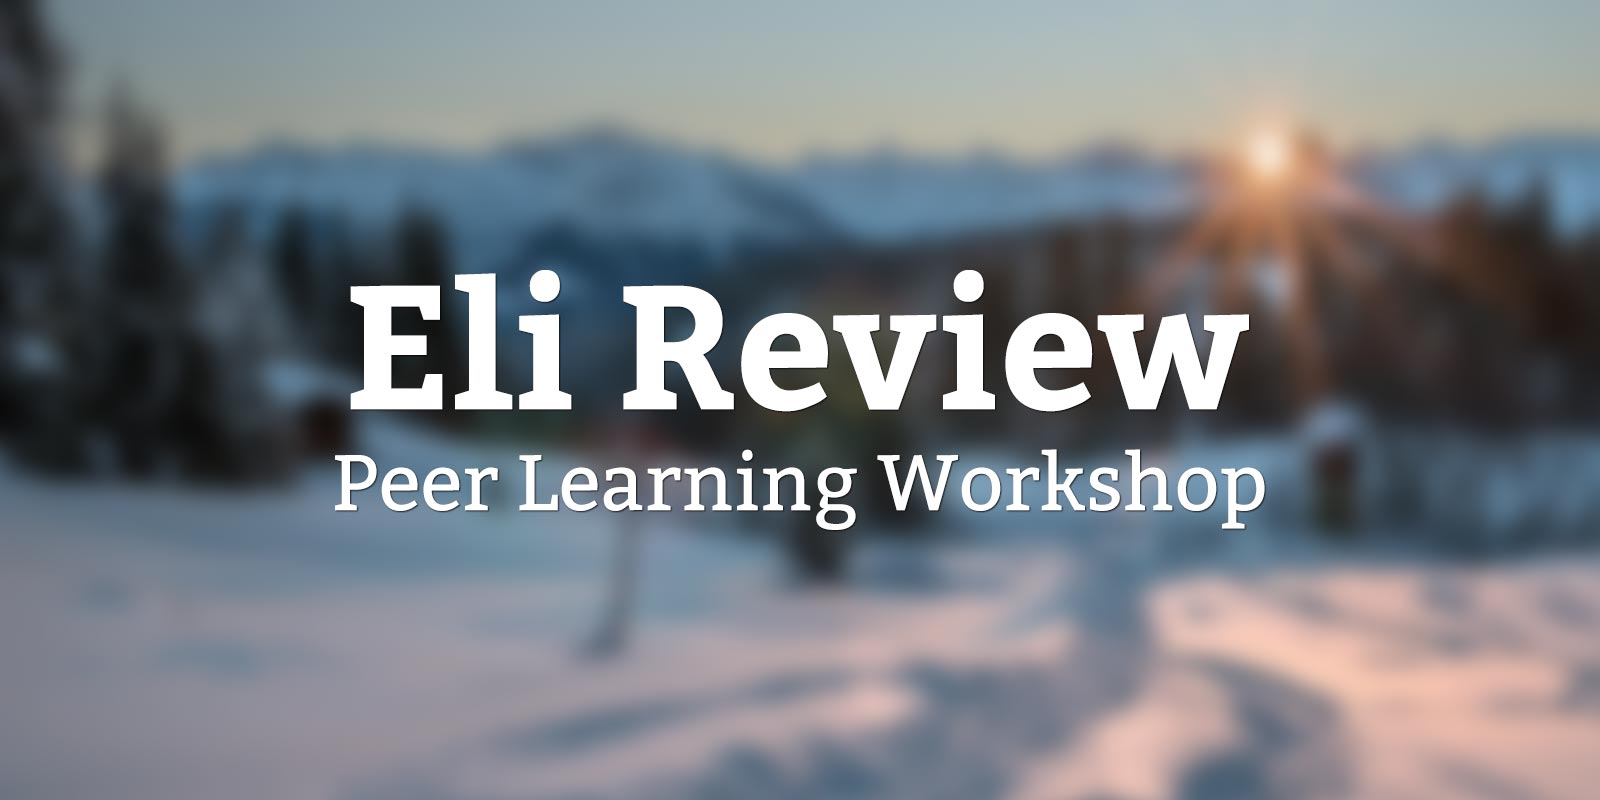 Eli Review Peer Learning Workshop Announcement